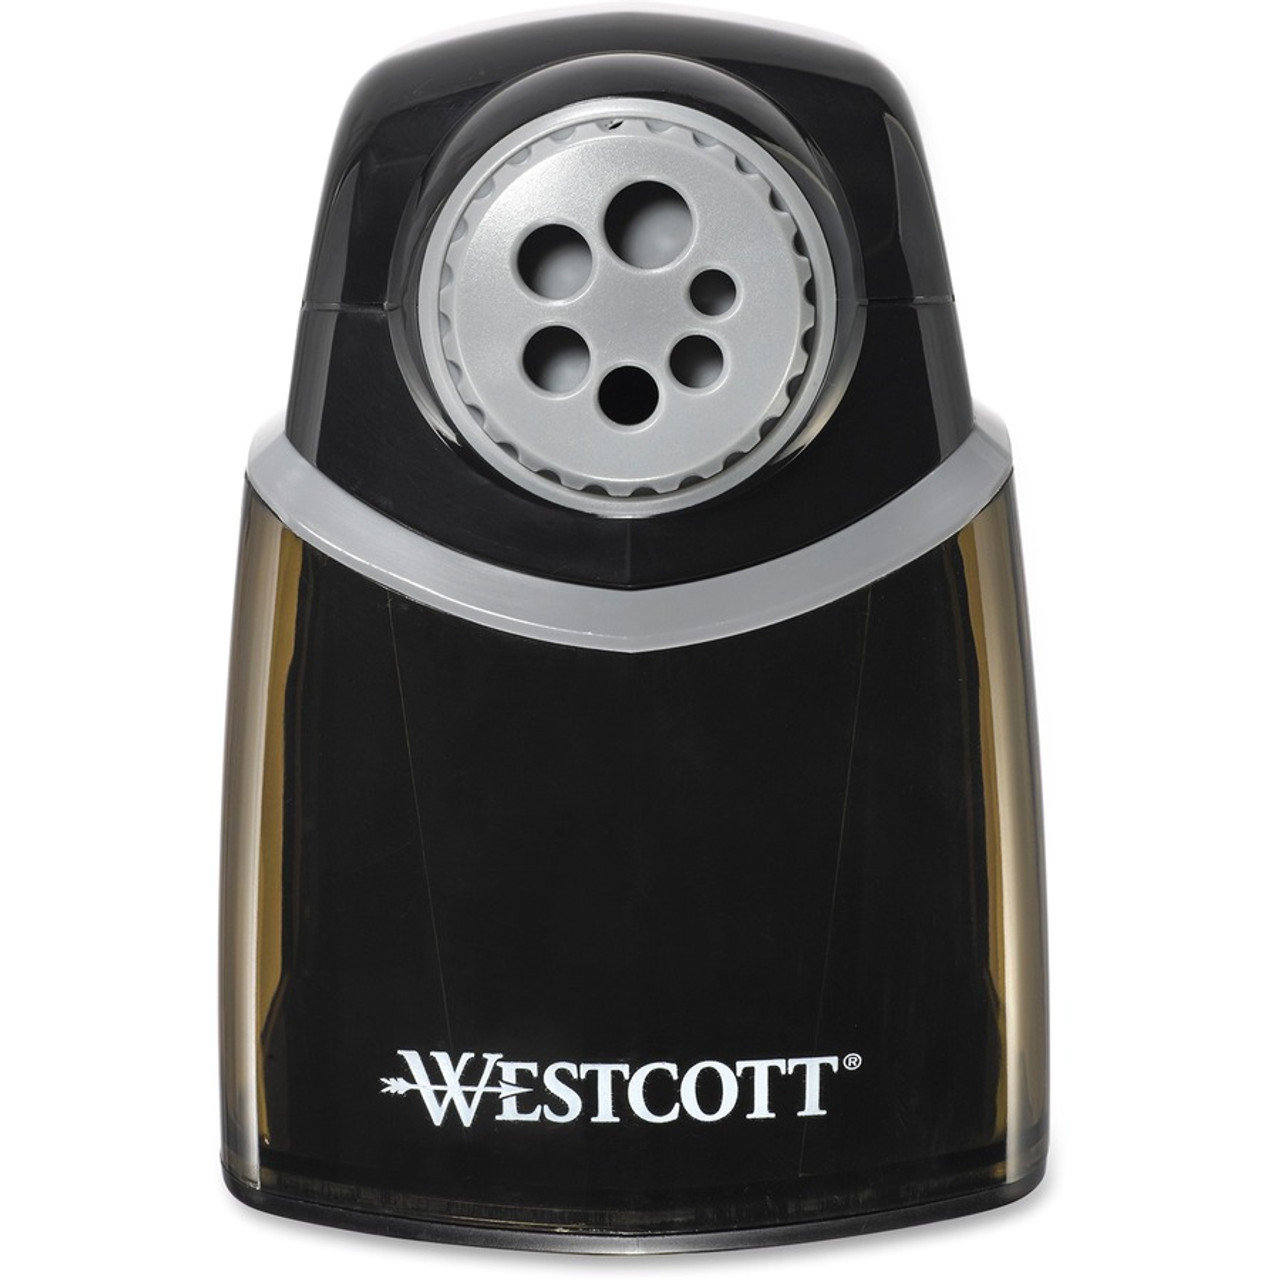 Westcott - Westcott Halo Electric Pencil Sharpener, Assorted Colors